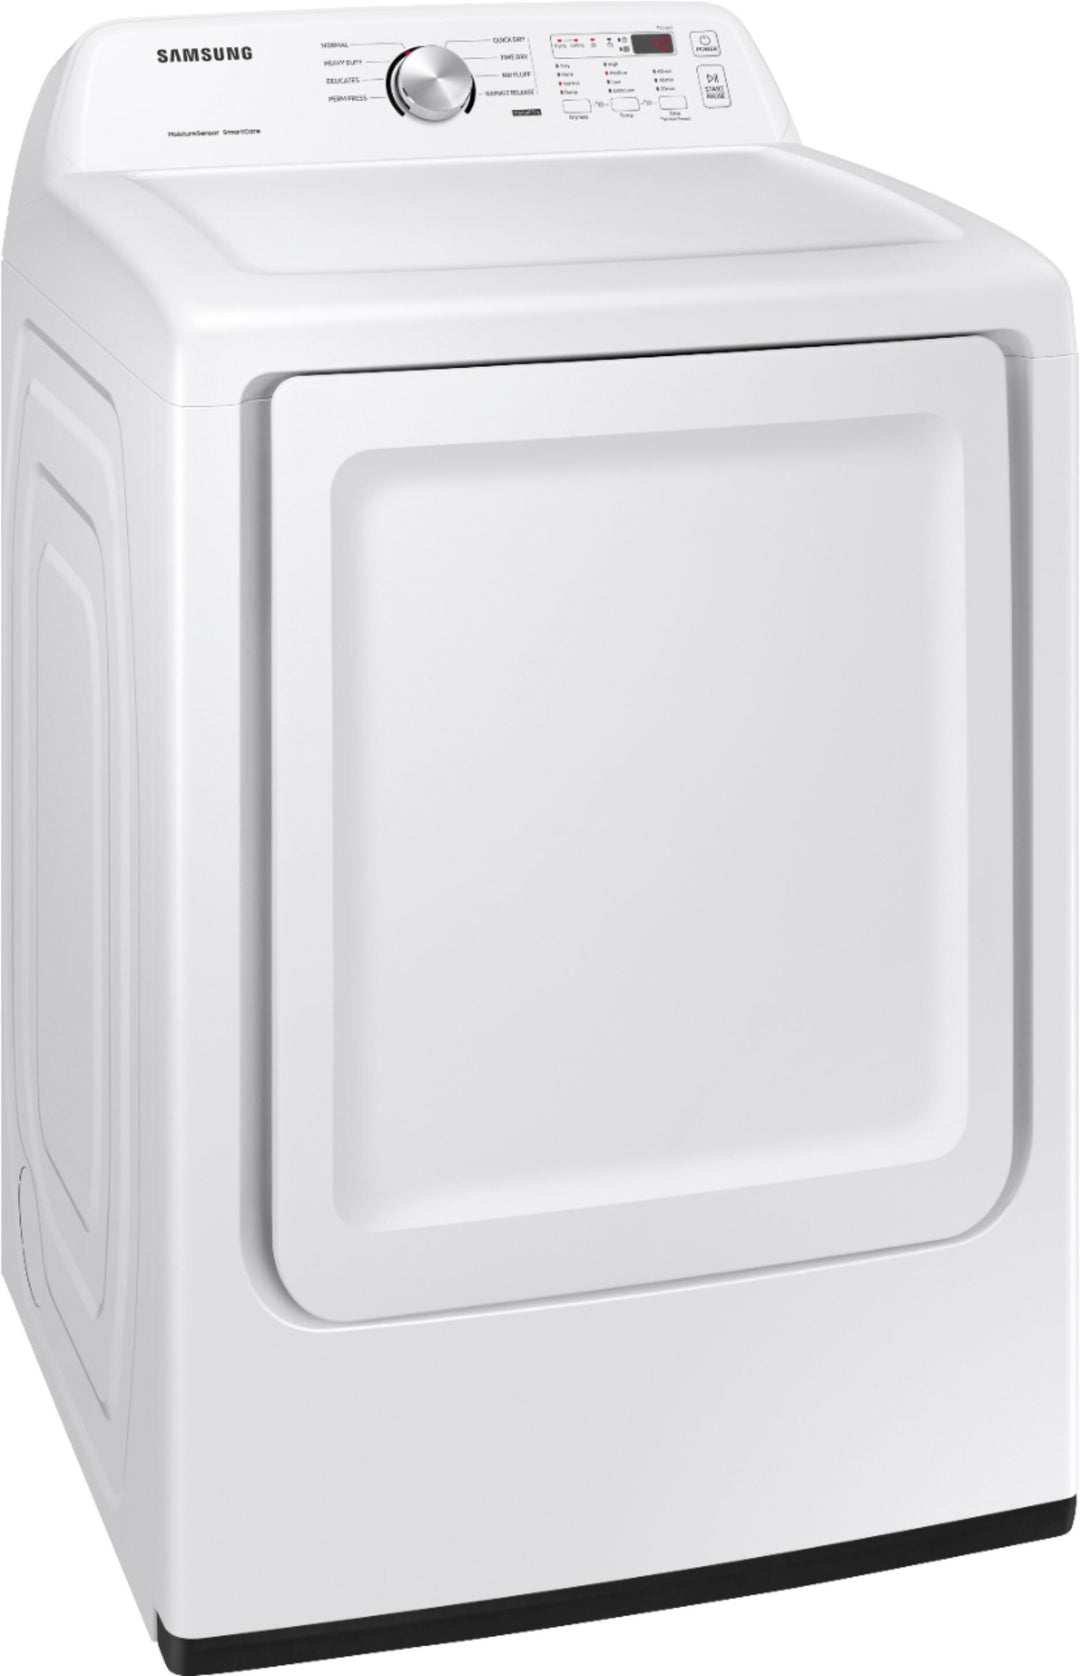 Samsung 4.5 Cu Ft High Efficiency Washer & 7.2 Cu Ft Electric Dryer Set - White